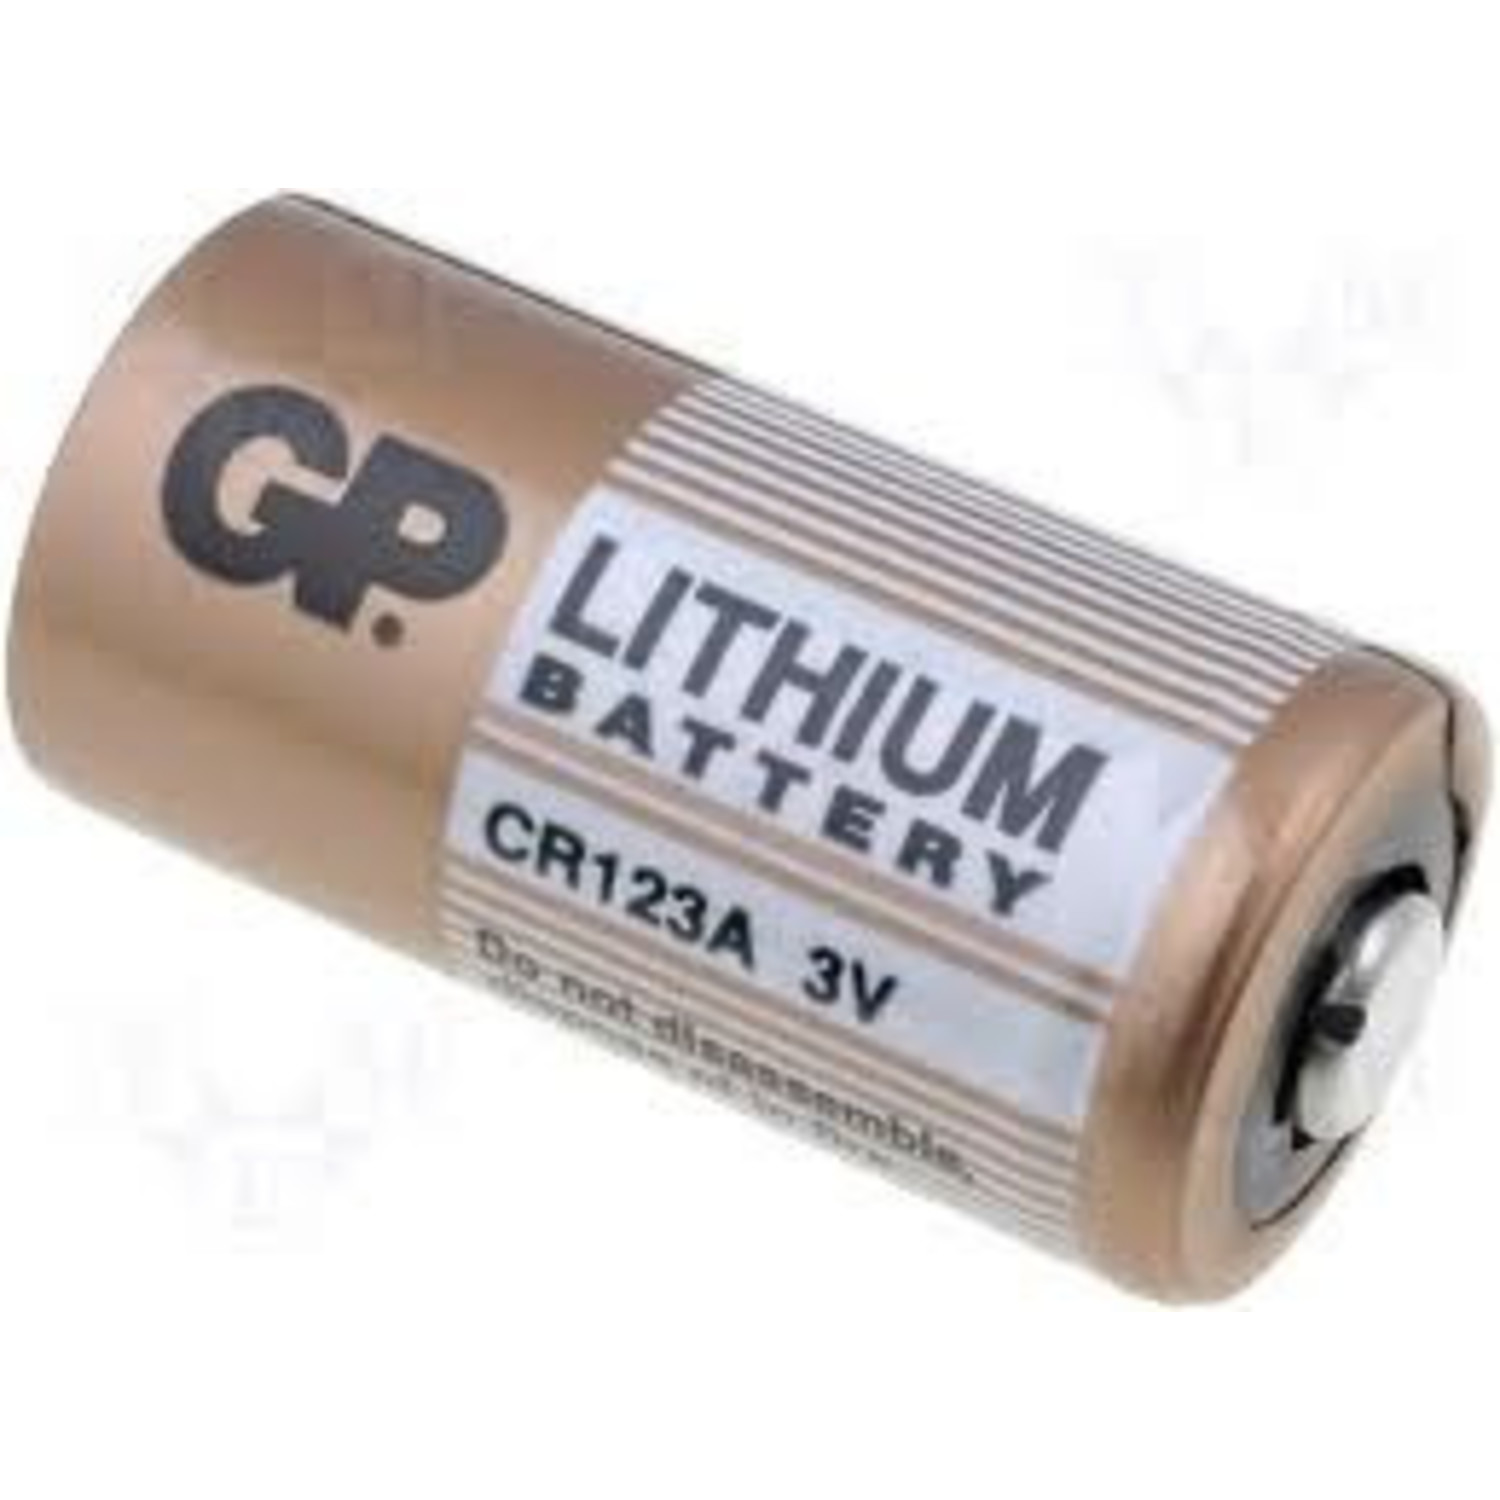 Communicatie netwerk club Champagne CR123A Lithium batterij - AlarmsysteemExpert.nl